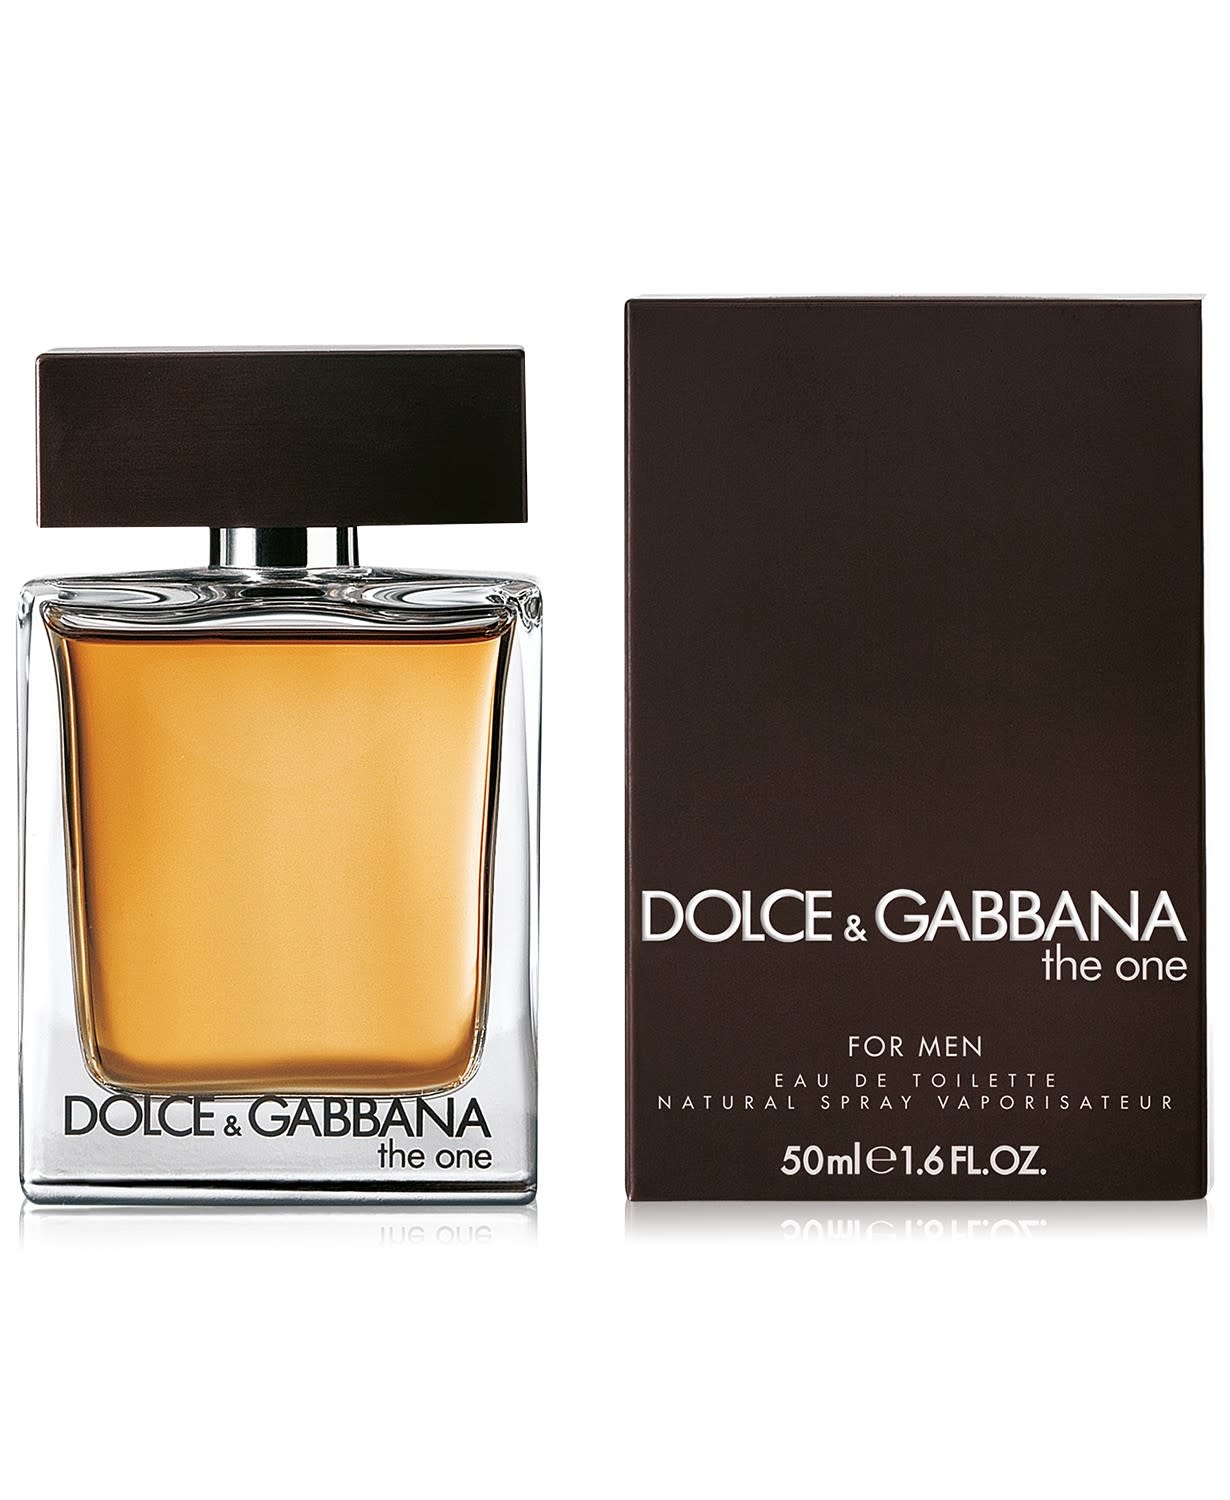 Дольче габбана the one купить. Dolce&Gabbana the one for men Toilette 100 ml. Dolce Gabbana the one for men 100 мл. Дольче Габбана the one 100ml. Dolce Gabbana the one for men 100ml EDT.